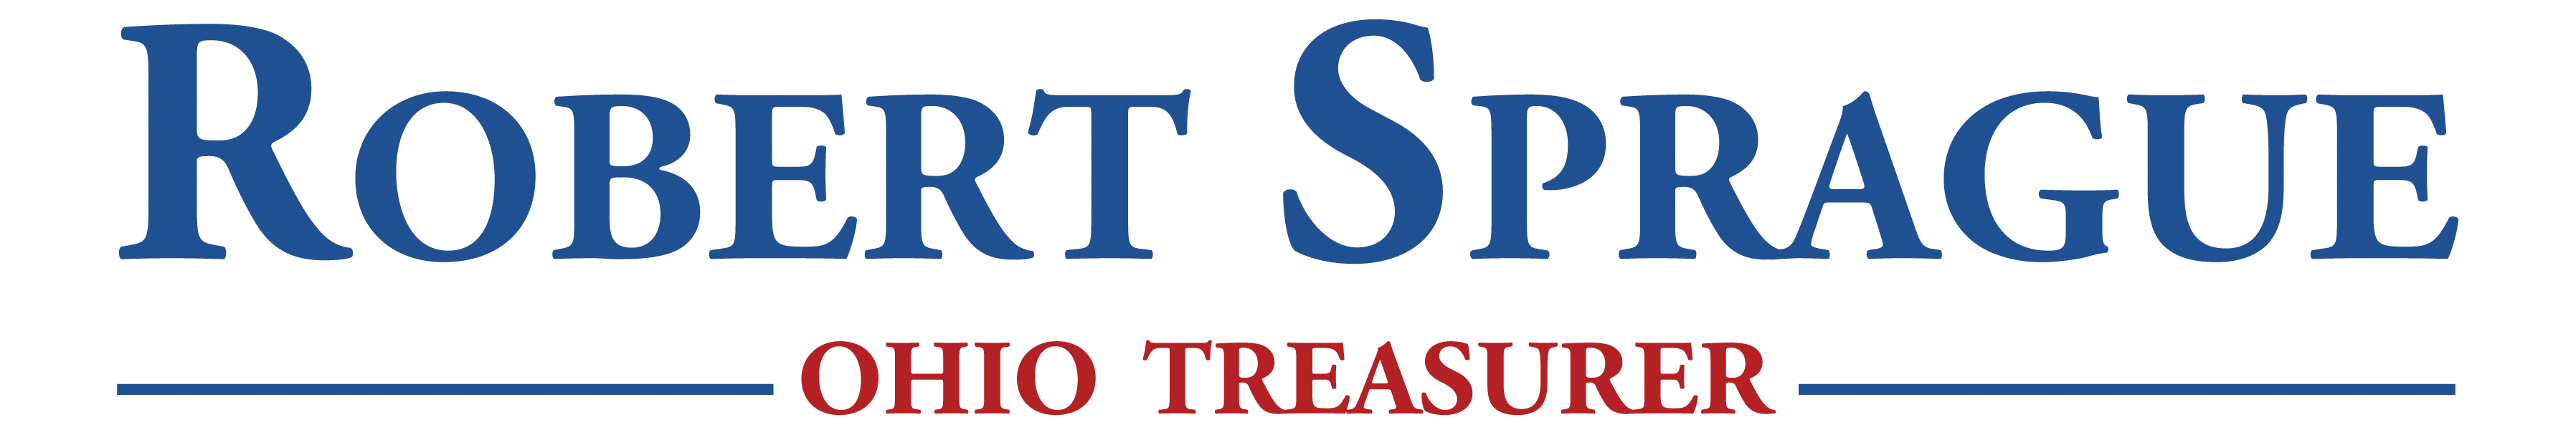 Ohio Enterprise Bond Fund Program - Official Seal or Logo